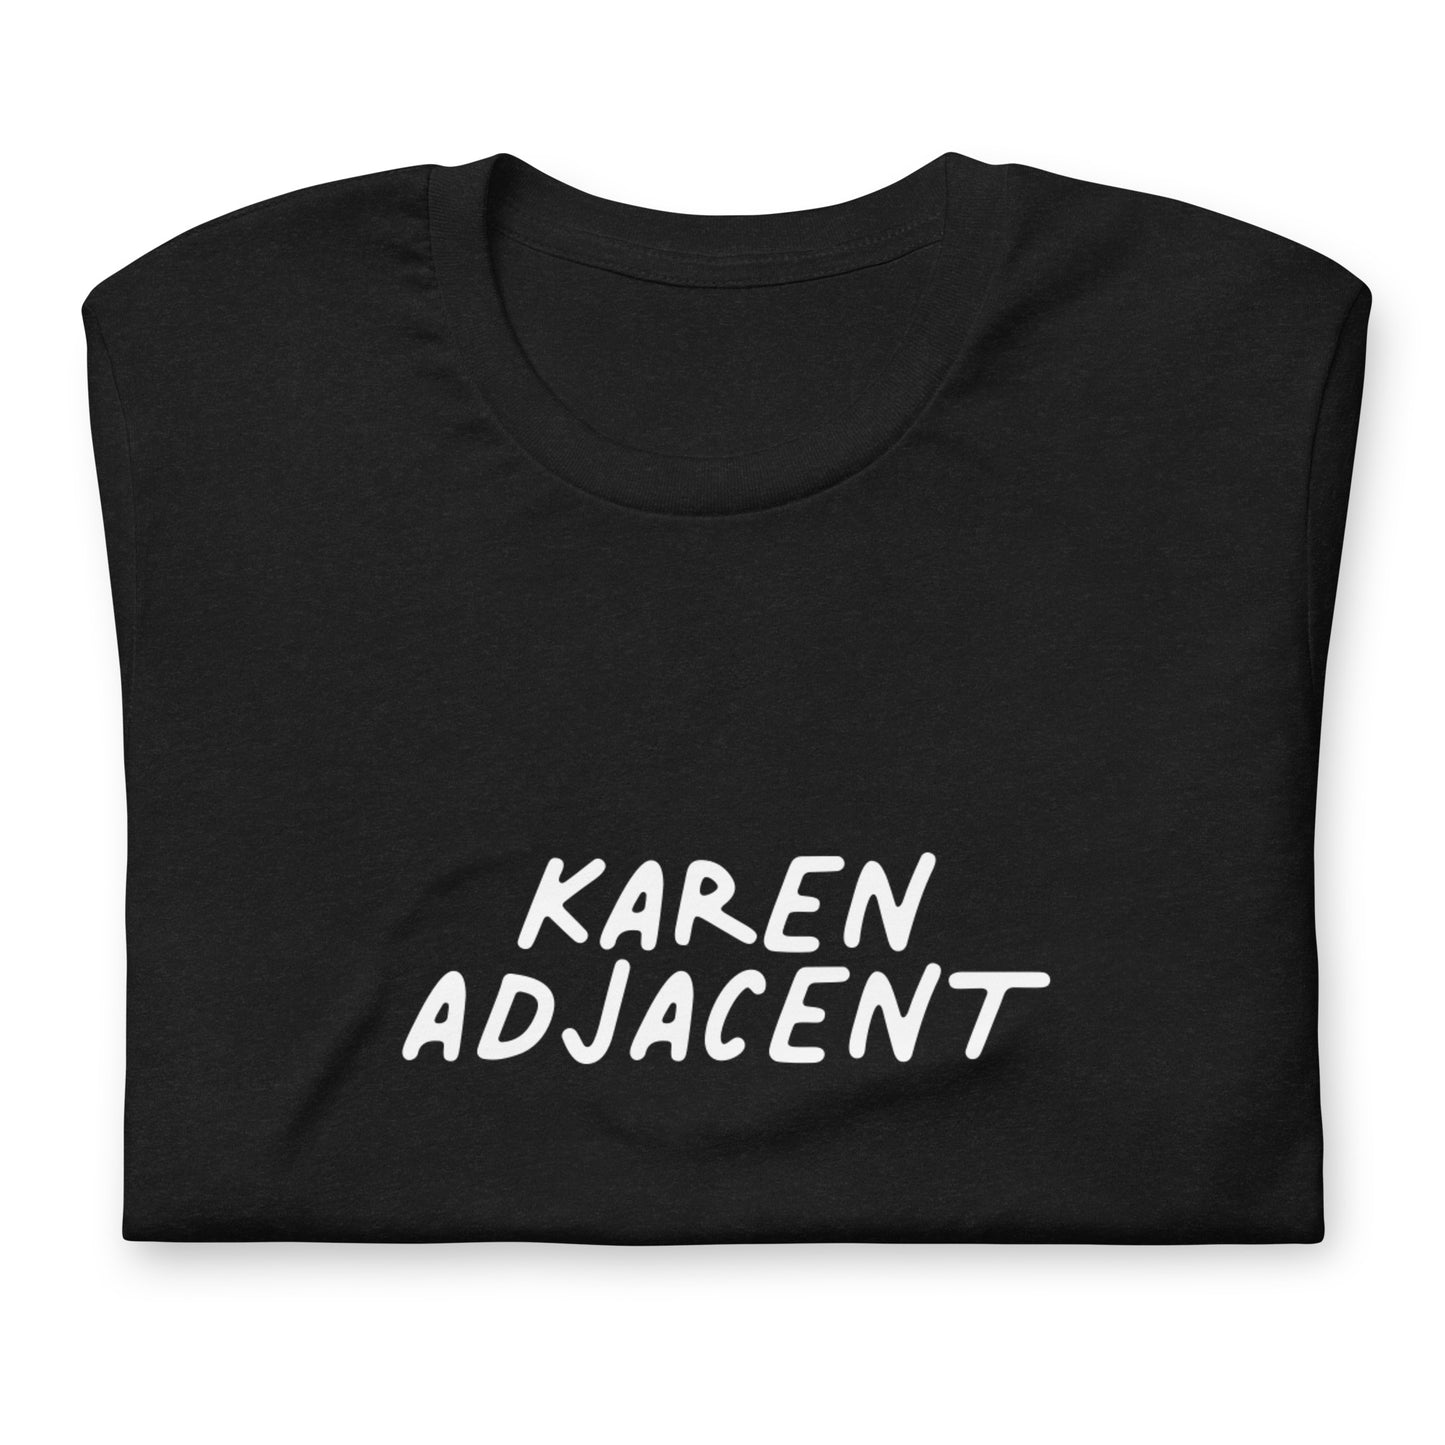 Karen Adjacent